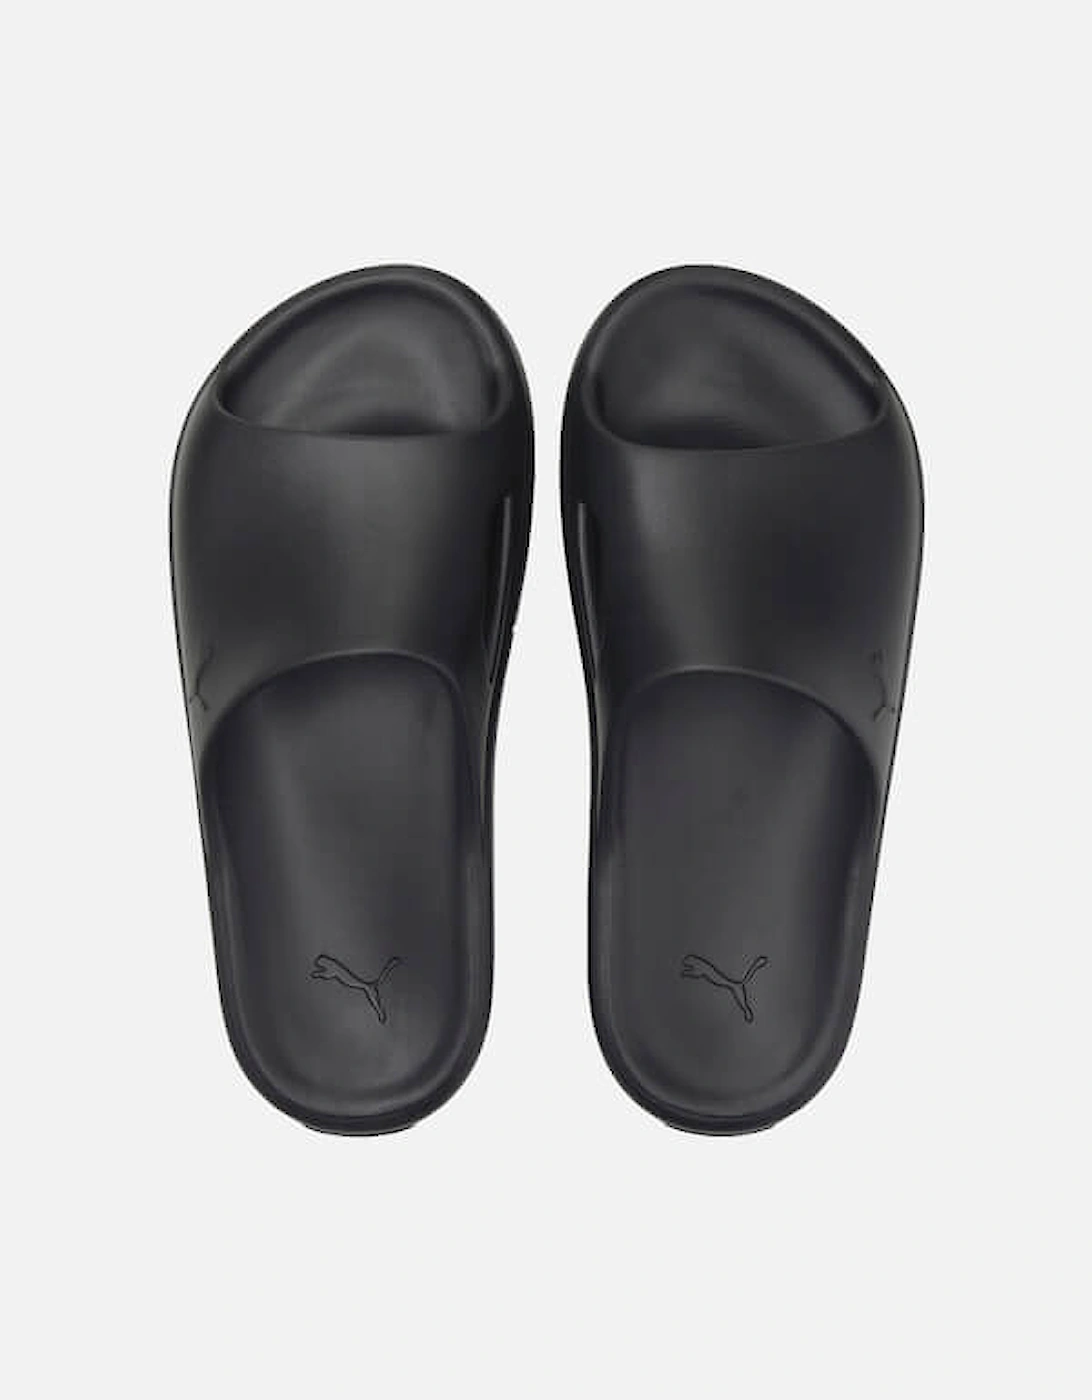 Puma's Shibui Cat Slide Sandals - Black/Black - - Home - Women's Shoes - Women's Sliders - Puma's Shibui Cat Slide Sandals - Black/Black, 3 of 2